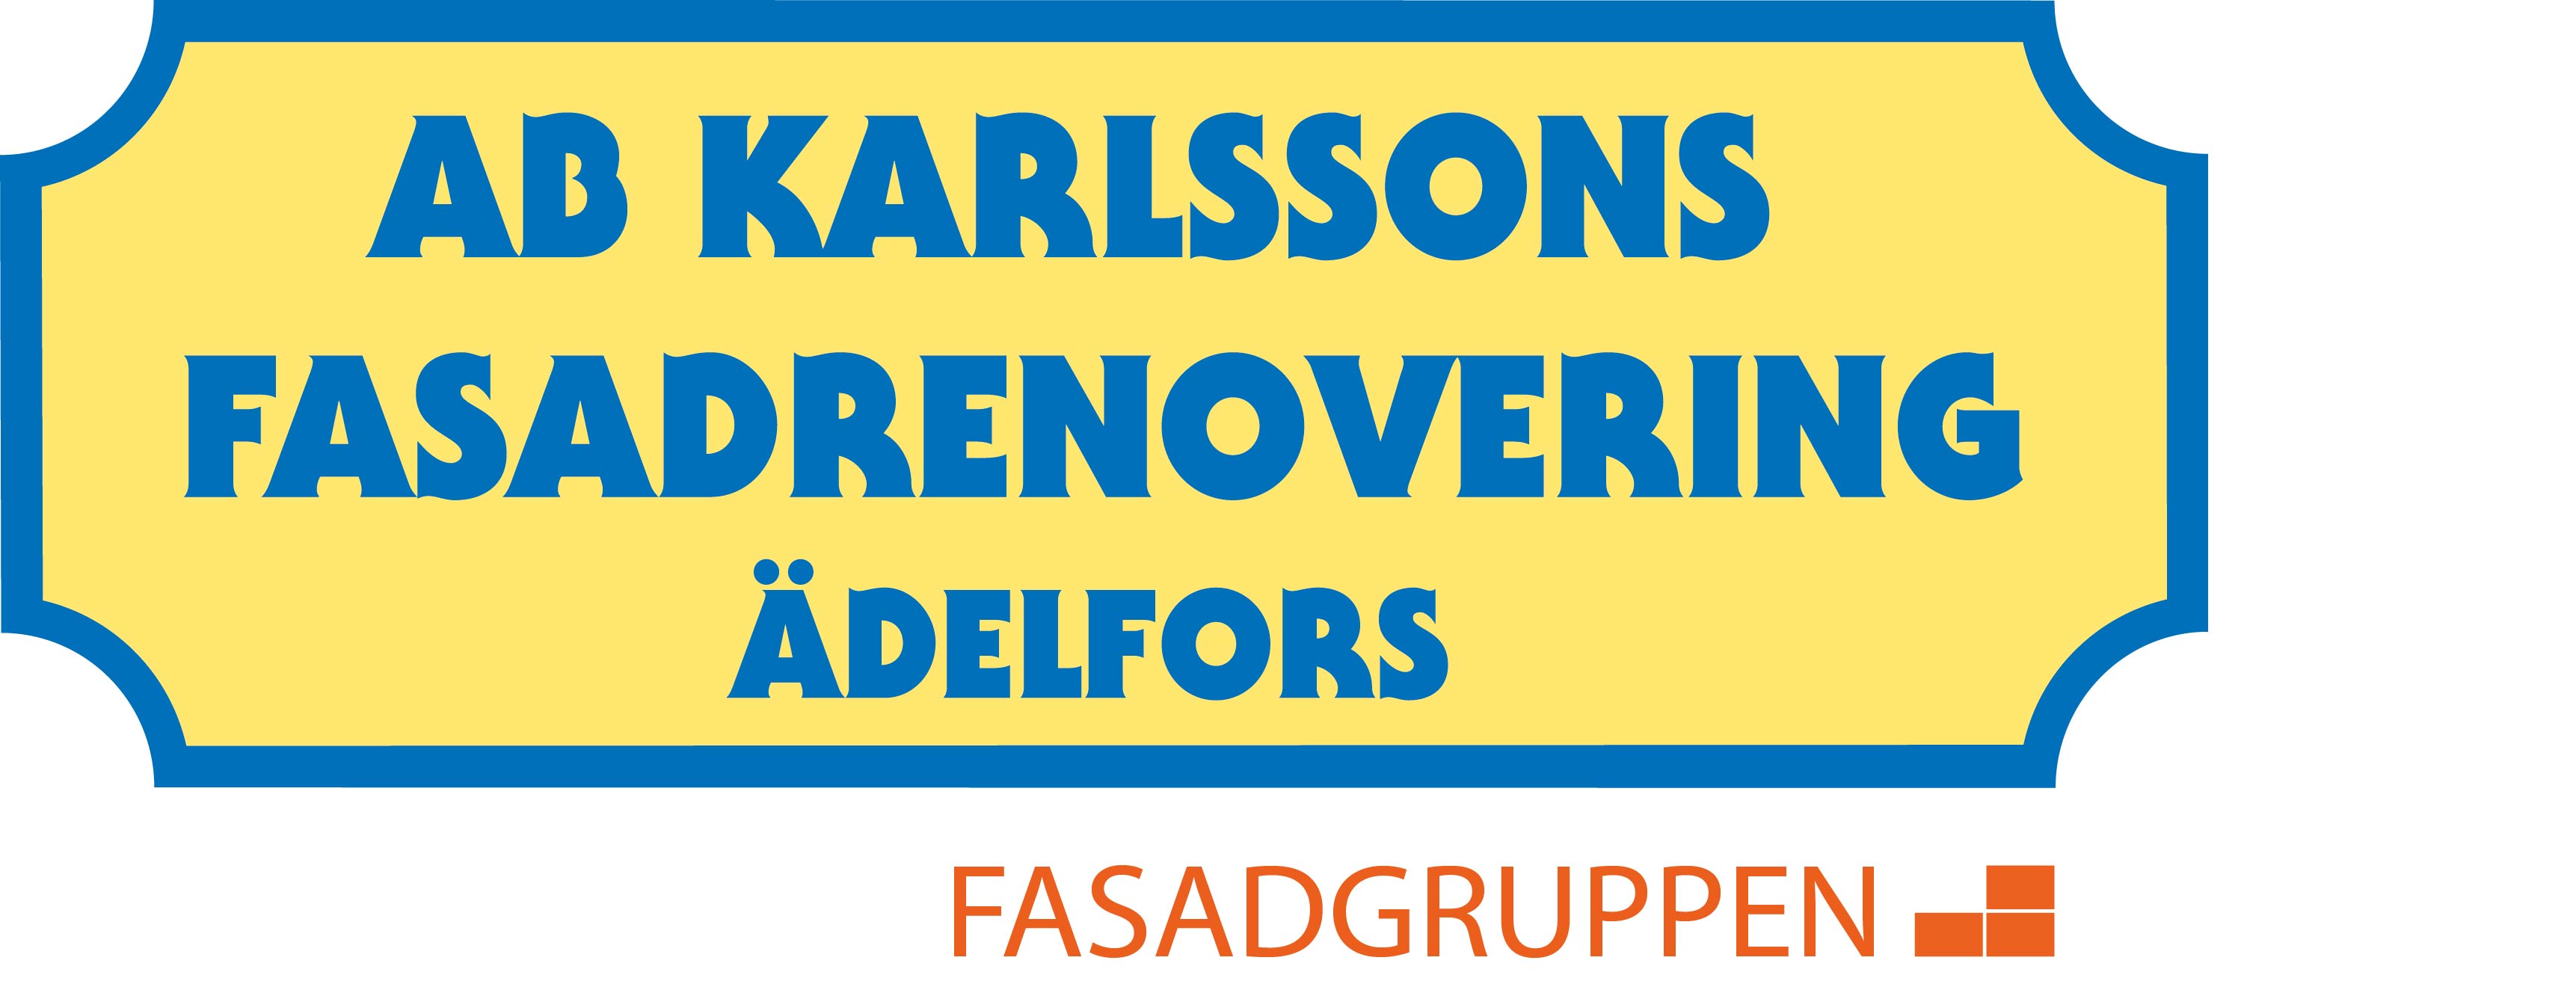 AB Karlsson Fasadrenovering